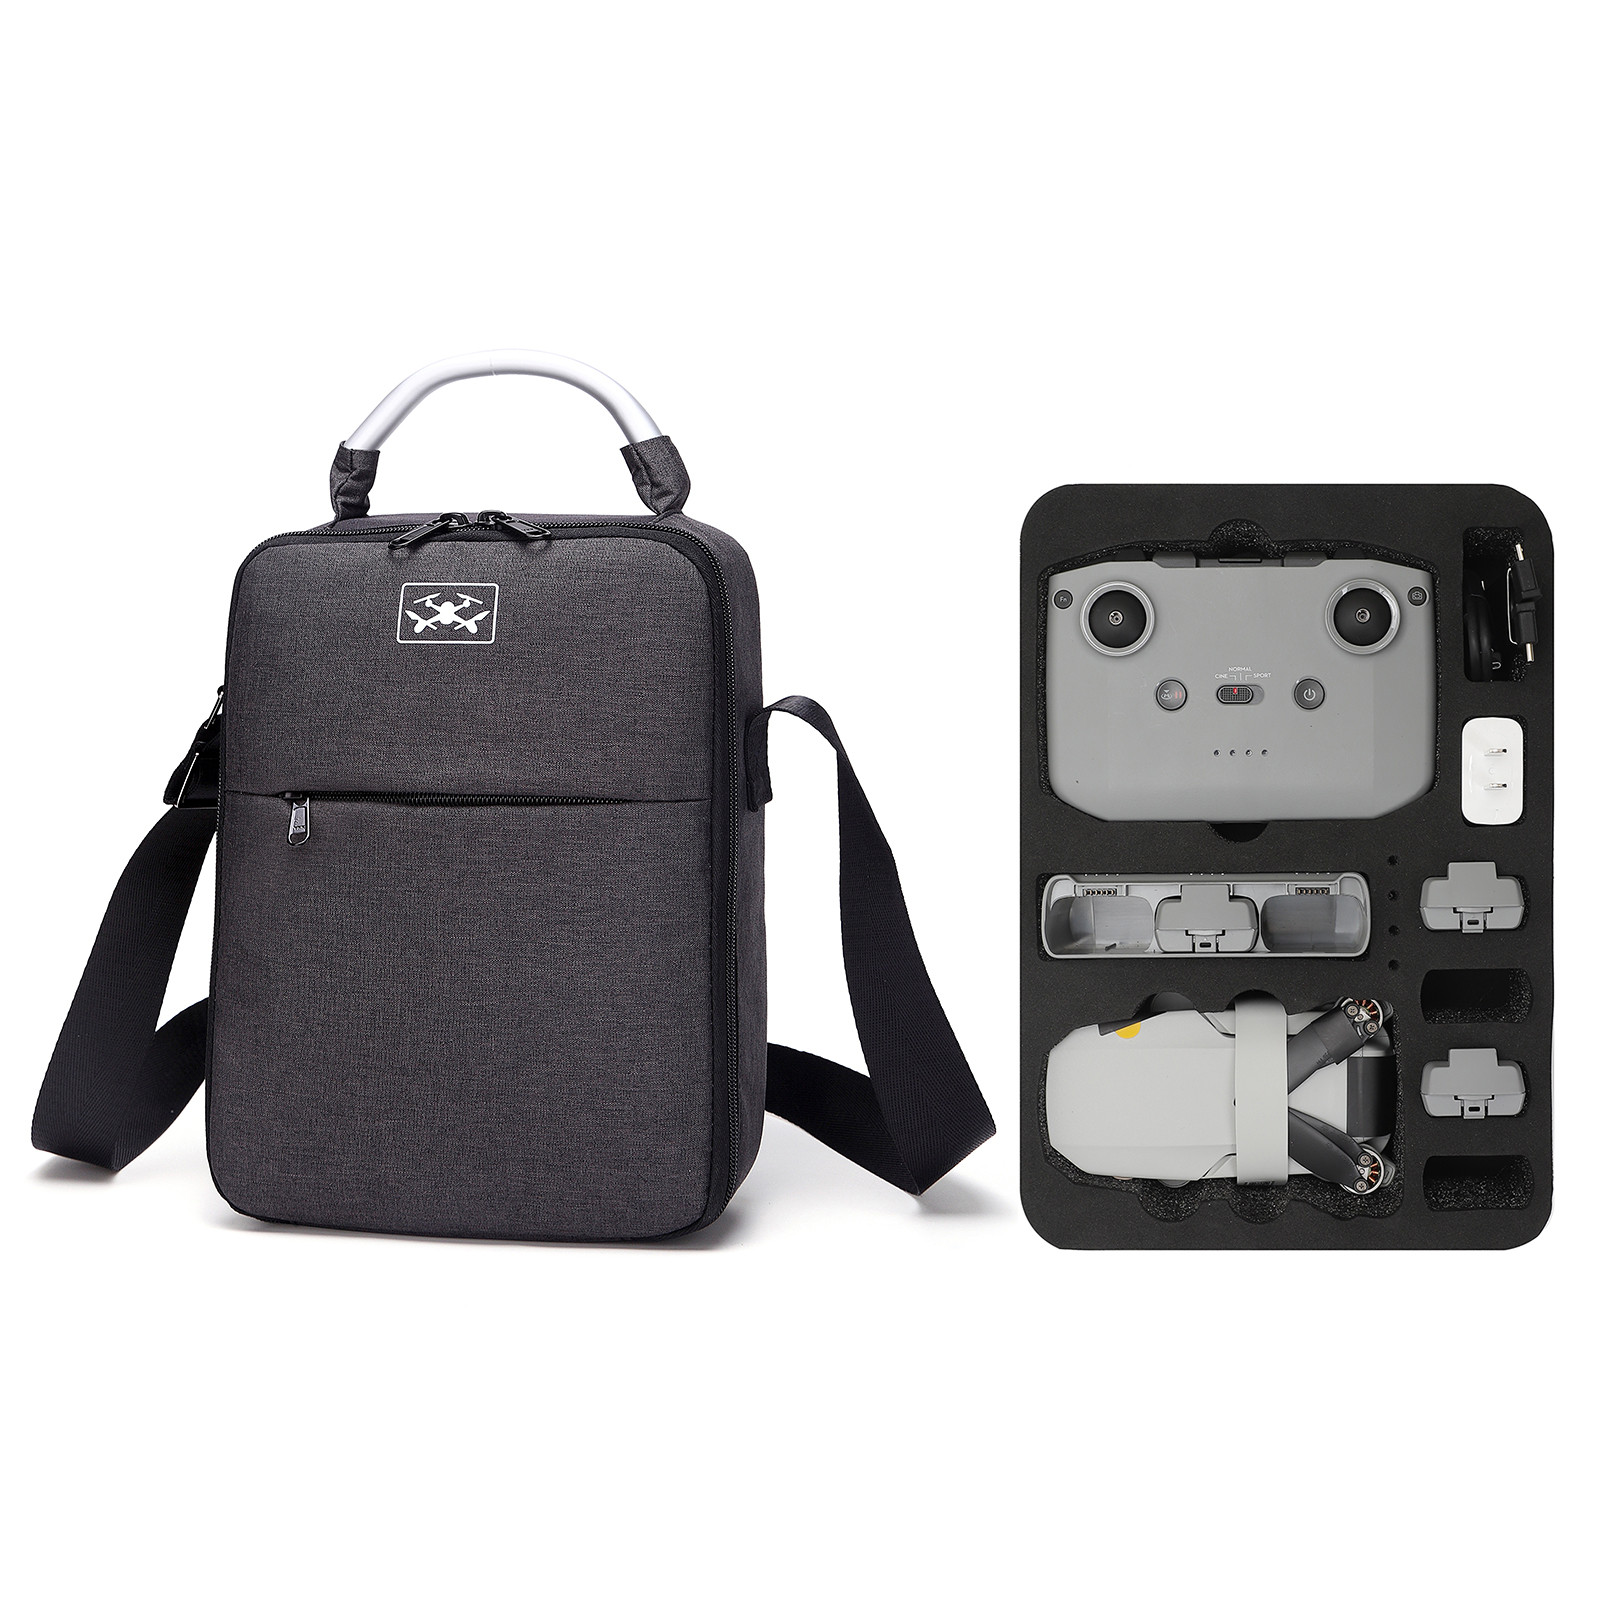 Durable Waterproof DJI Mini 2 Drone Bag